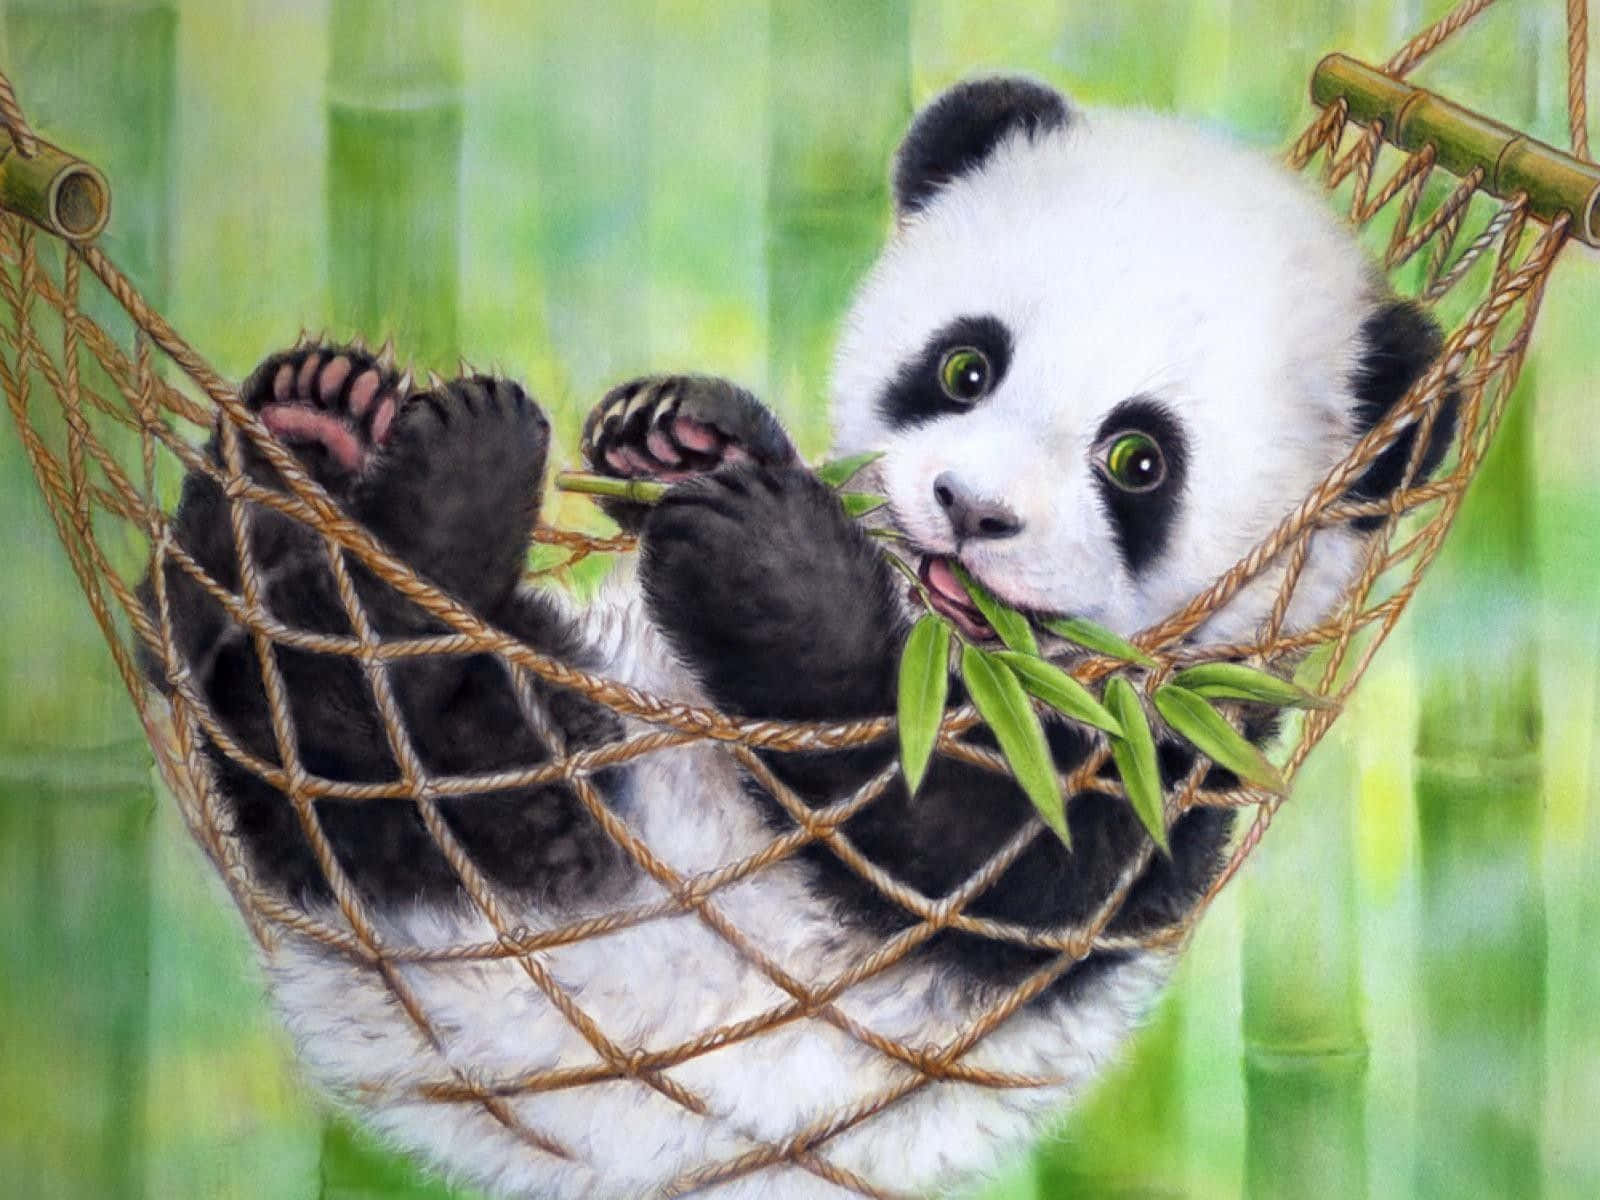 Giant Panda Relaxing On Hammock Wallpaper